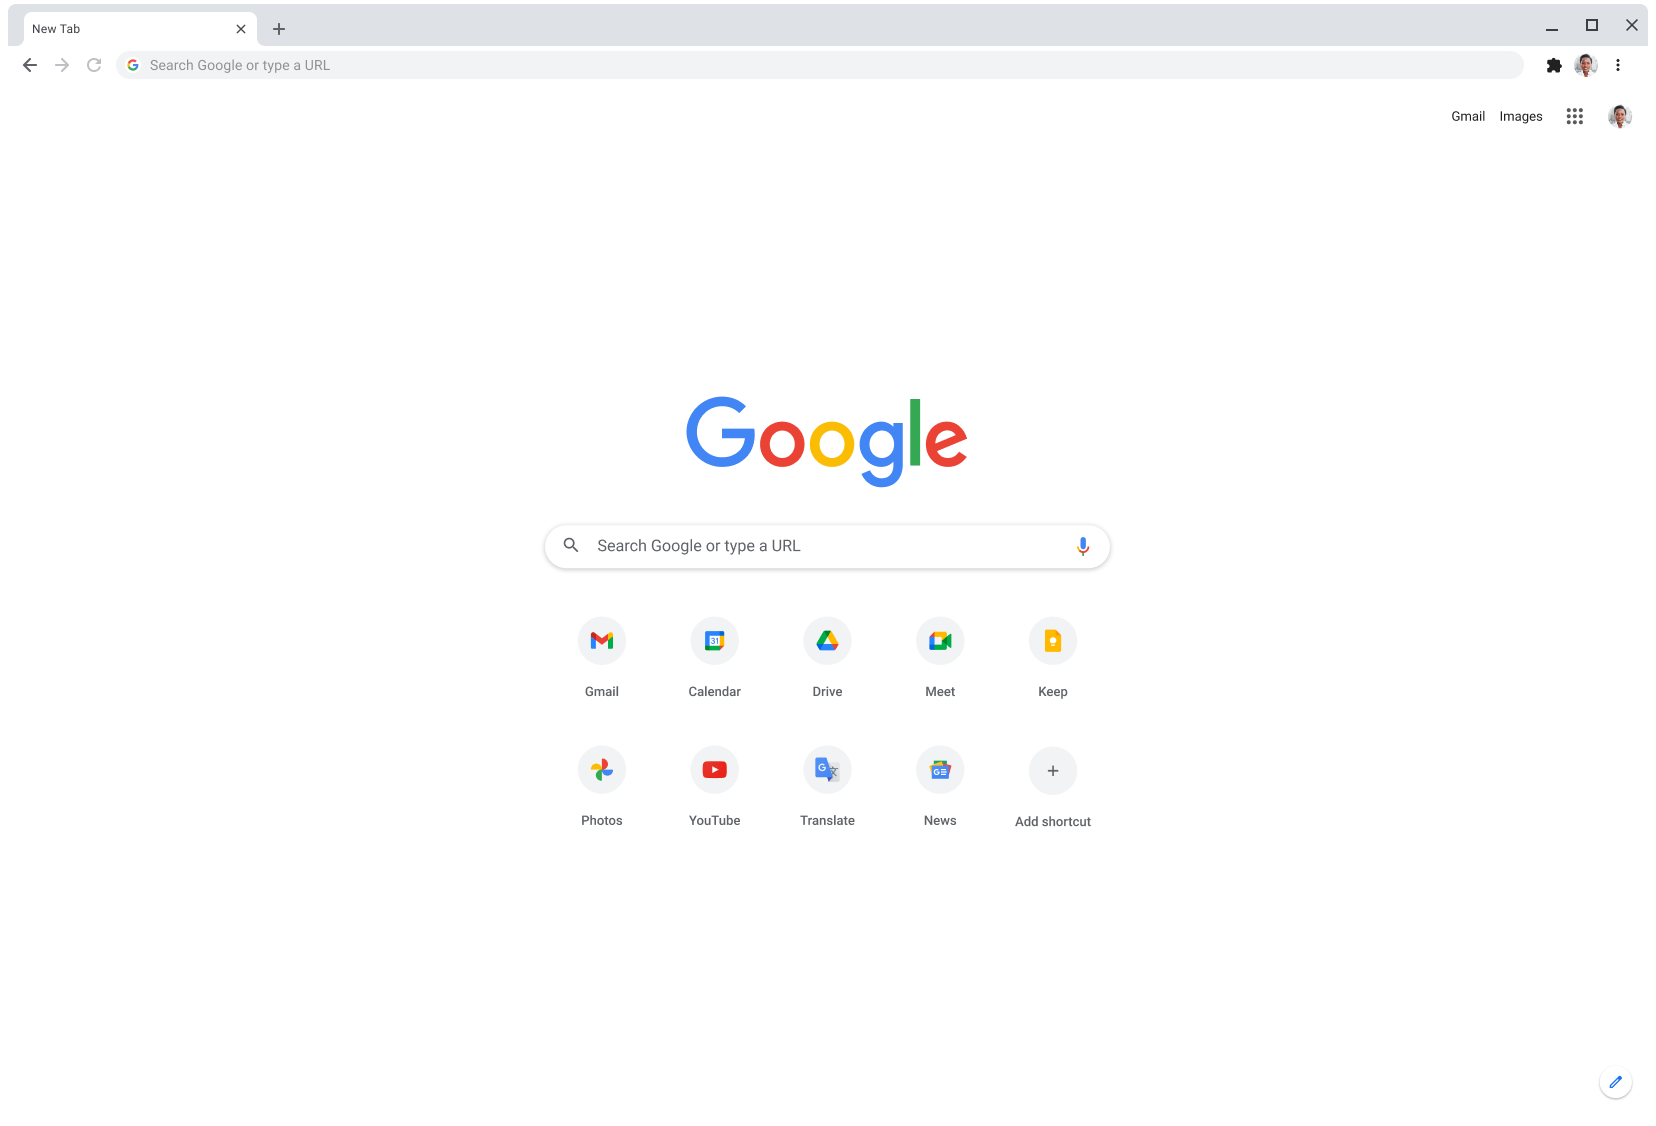 chrome browser google update